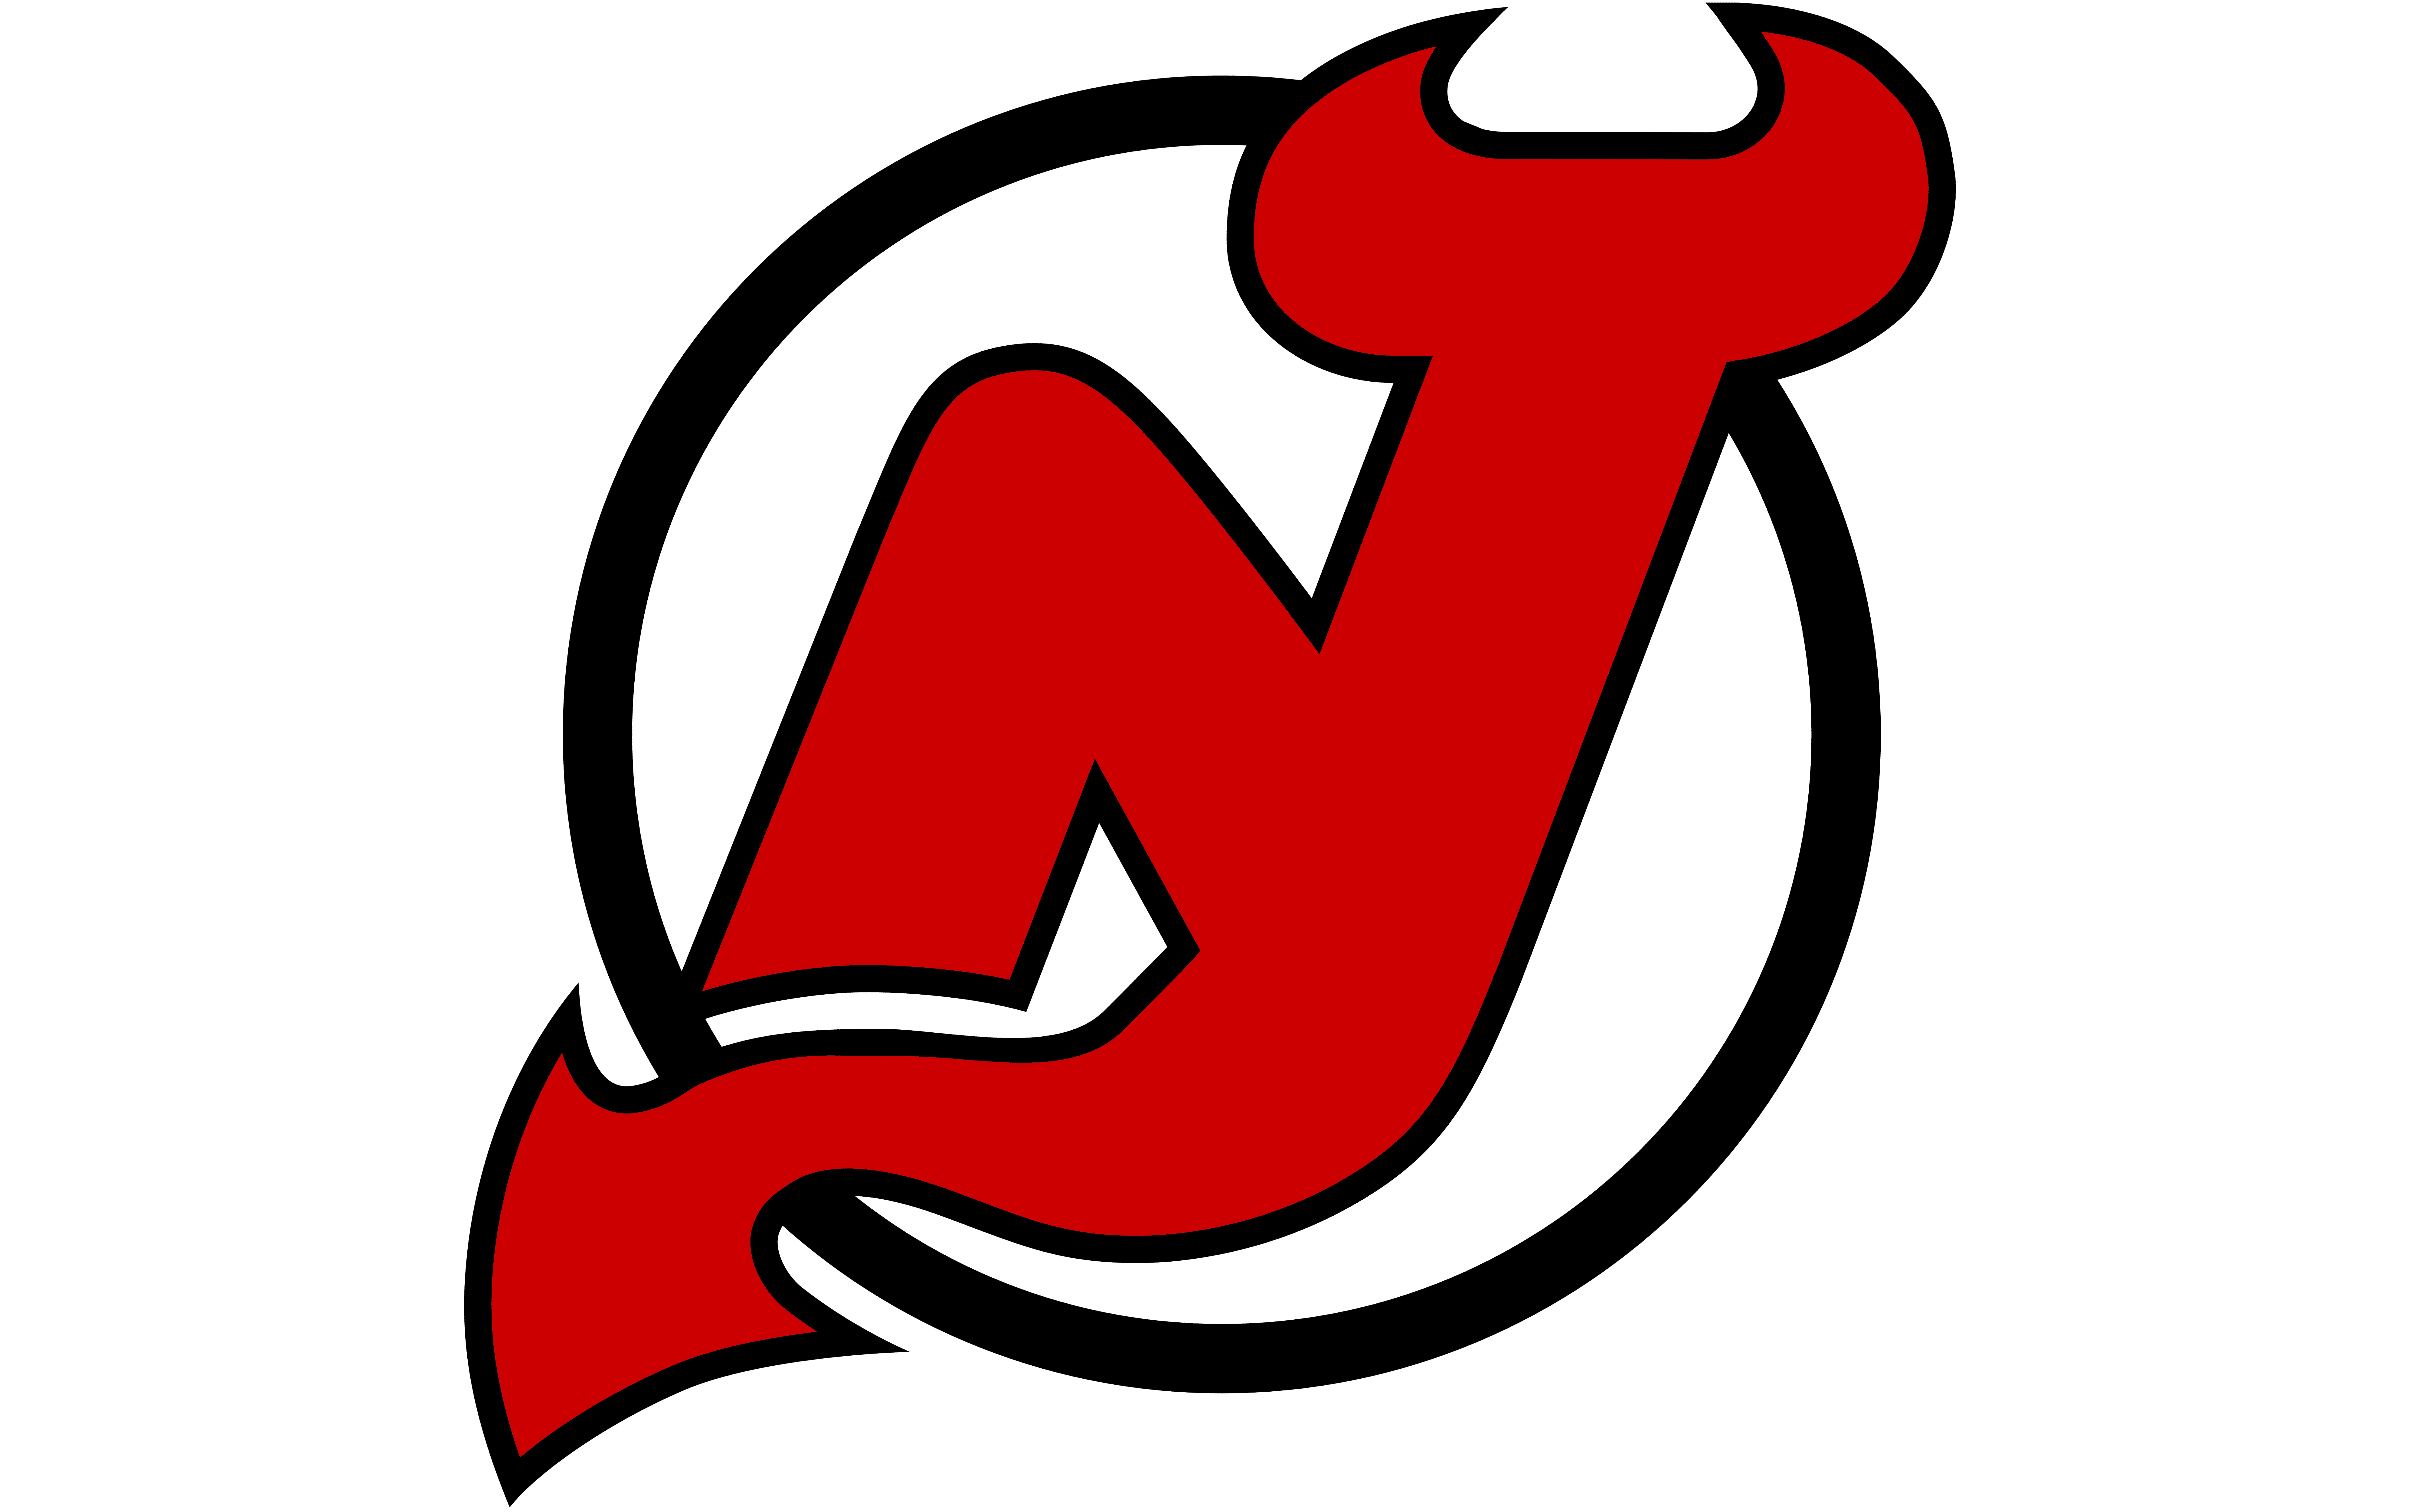 Devils logo idea | Logos, Game logo design, Sports logo inspiration